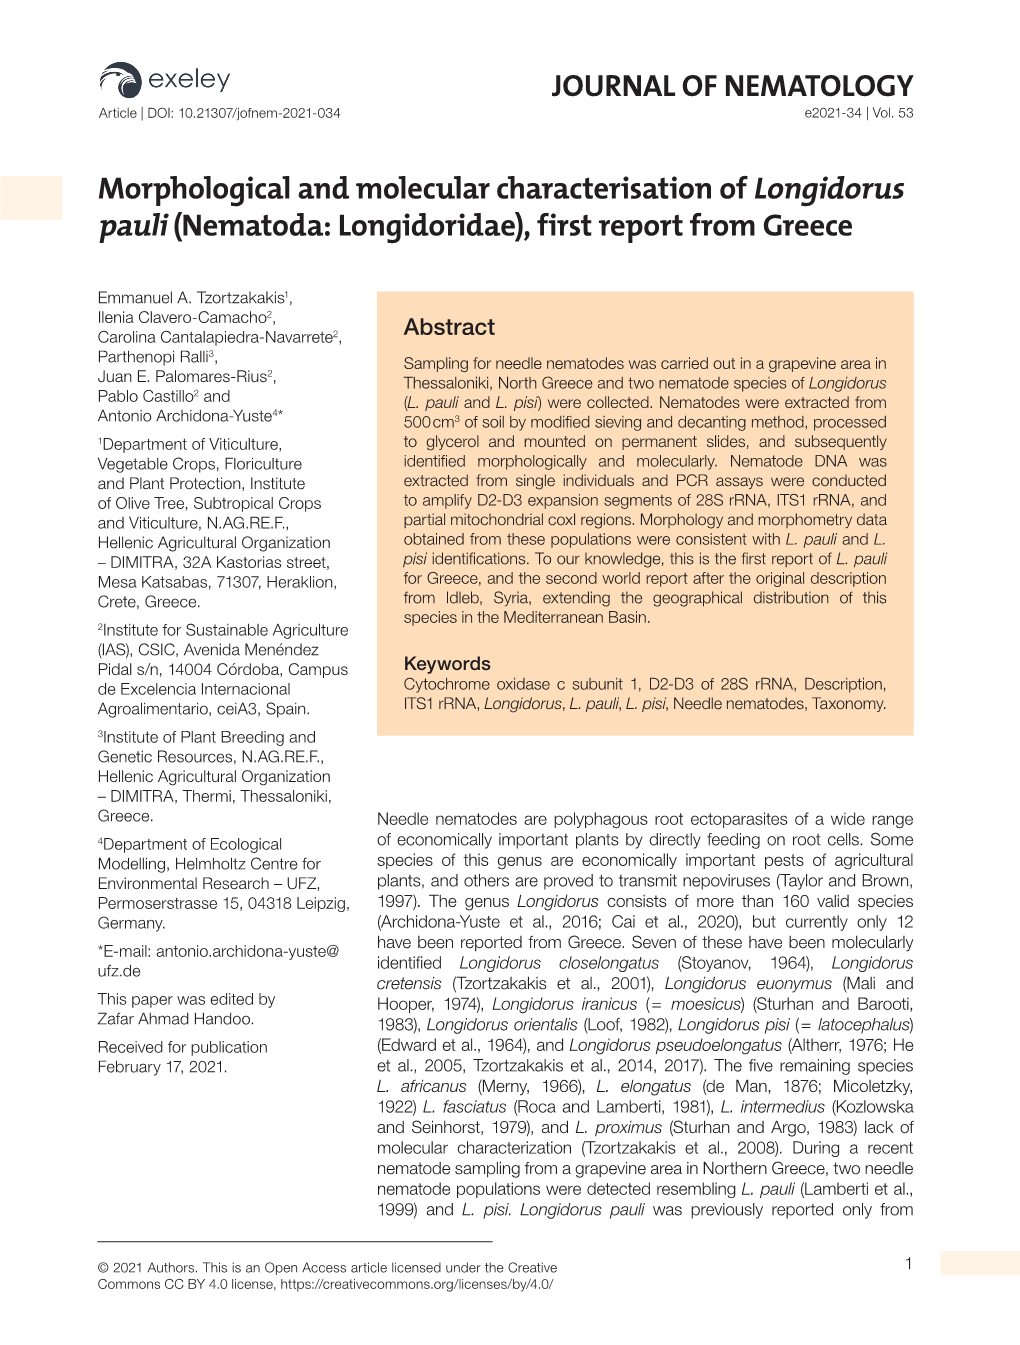 Morphological and Molecular Characterisation of Longidorus Pauli (Nematoda: Longidoridae), First Report from Greece